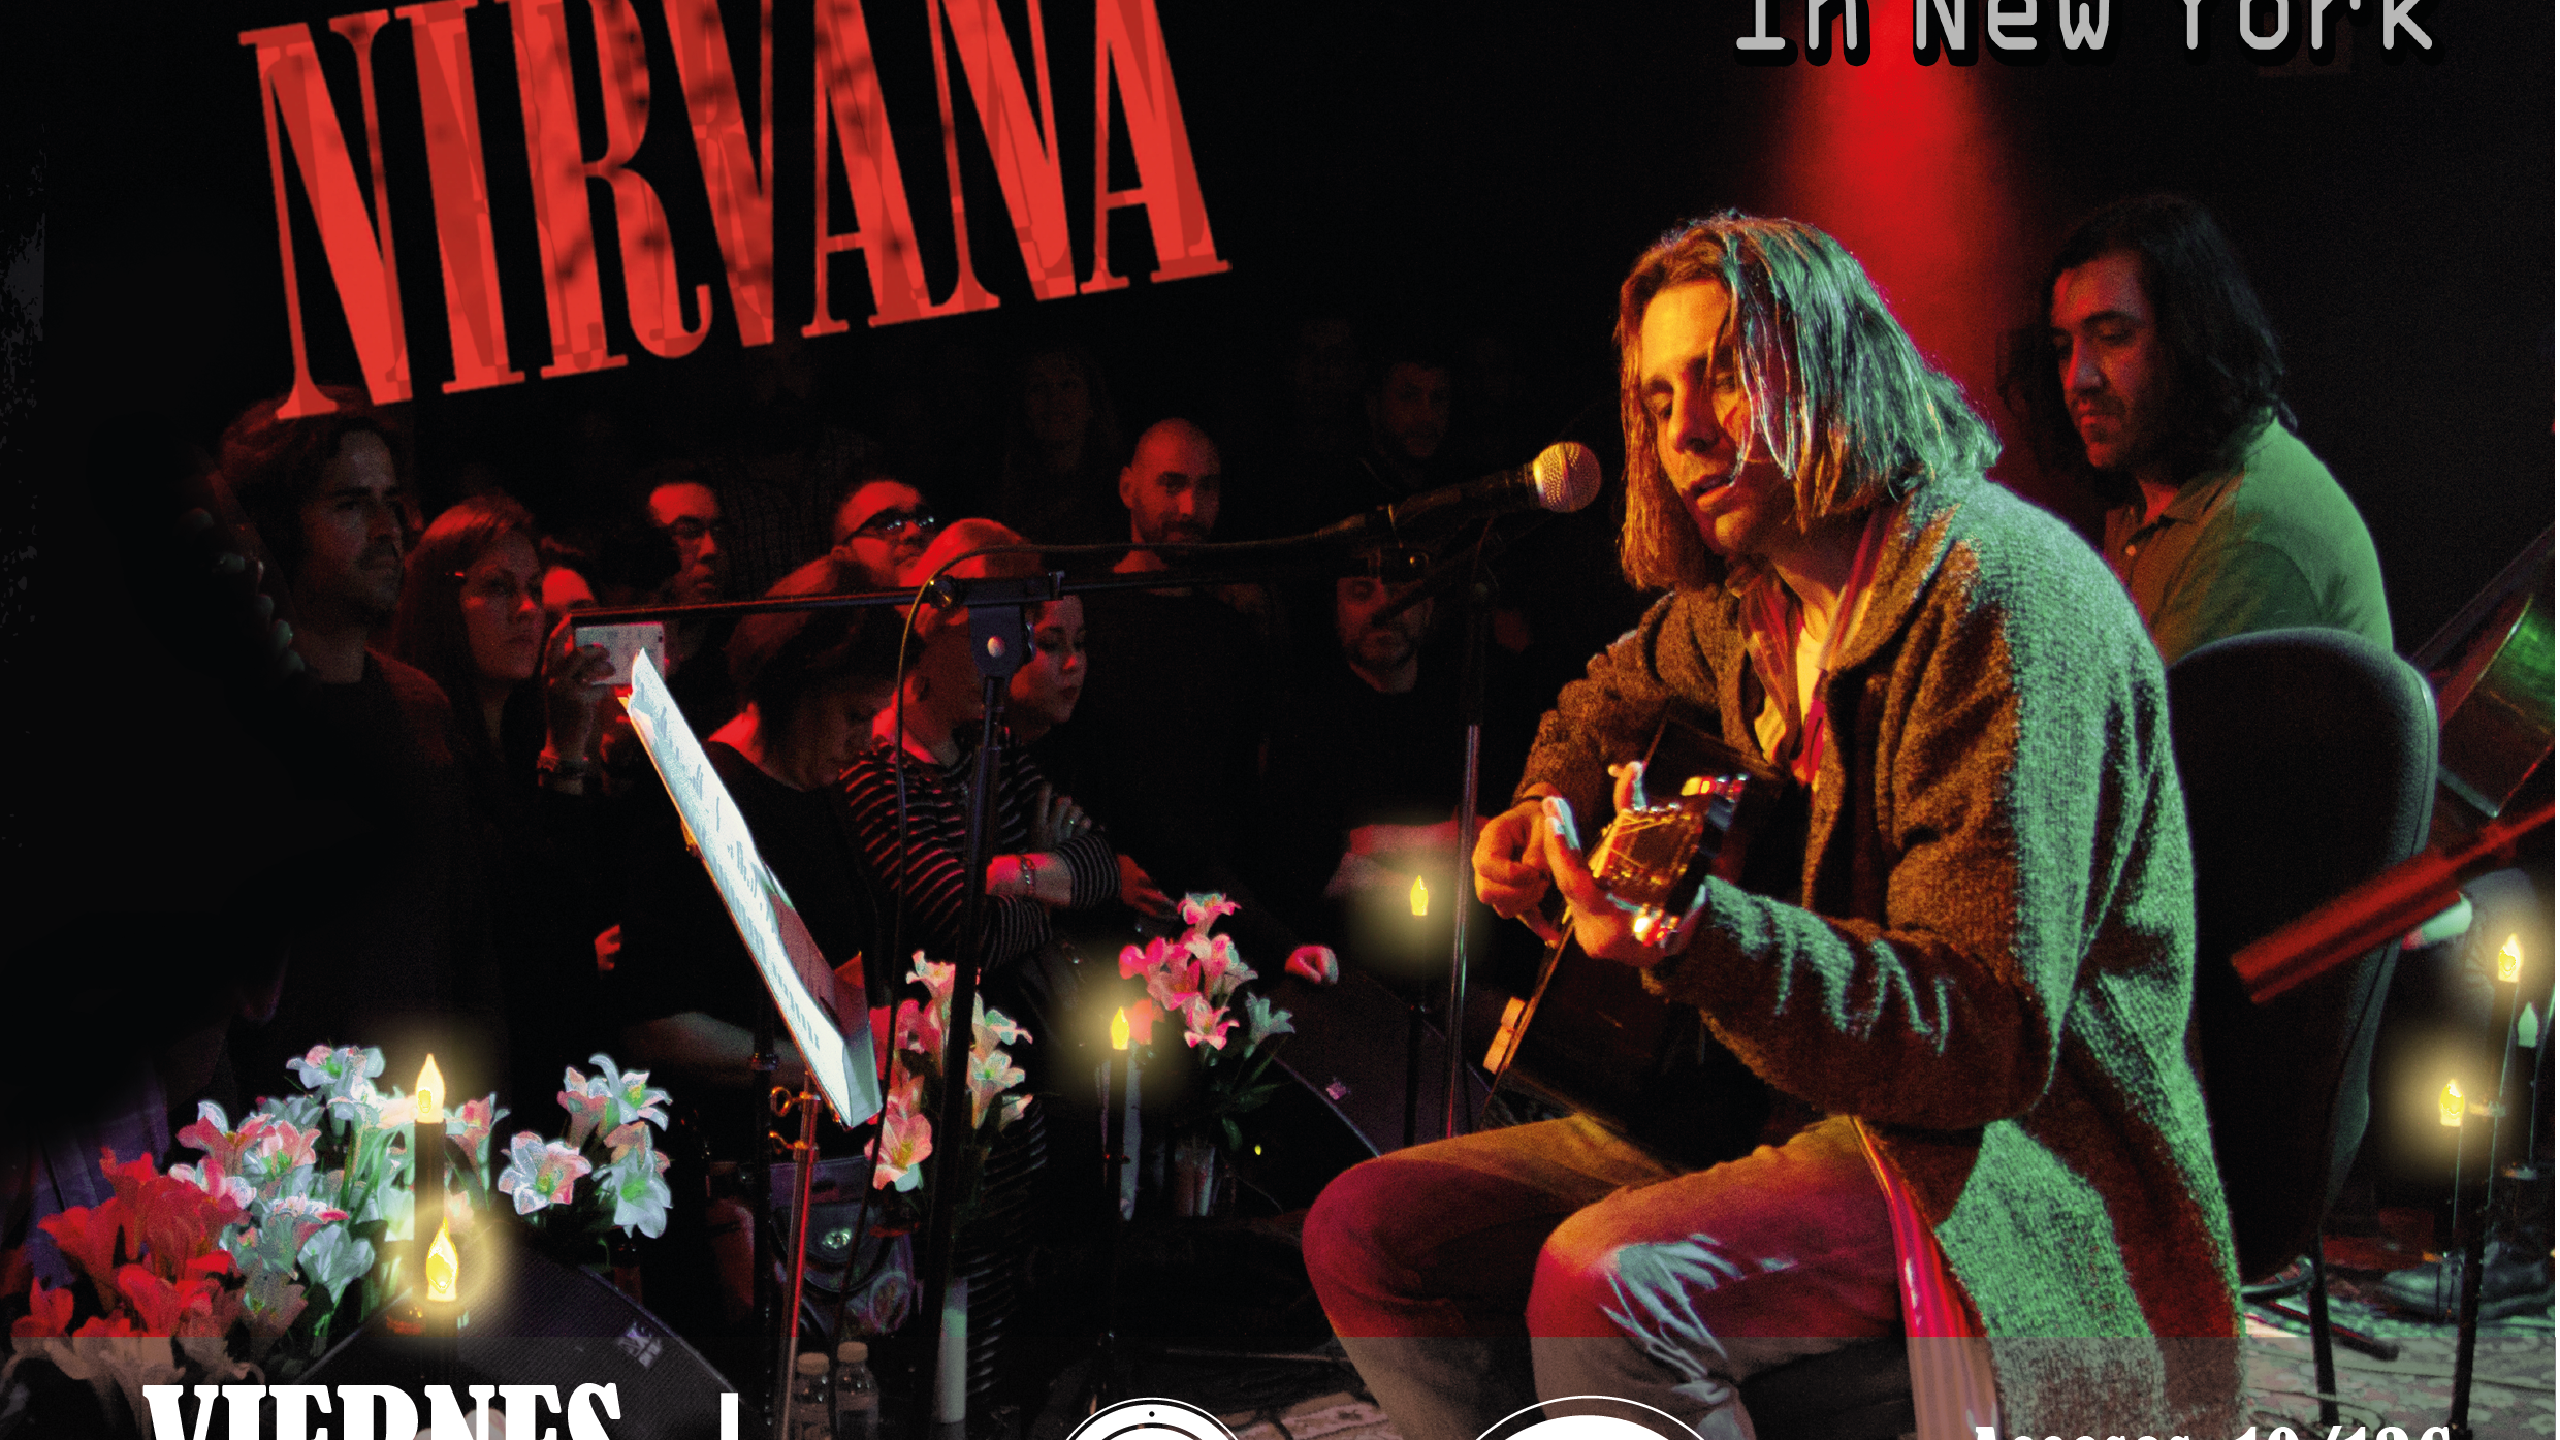 Nirvana buzz. Nirvana Concert. The Buzz lovers группа. Nirvana концерт. Nirvana концерт 1386.